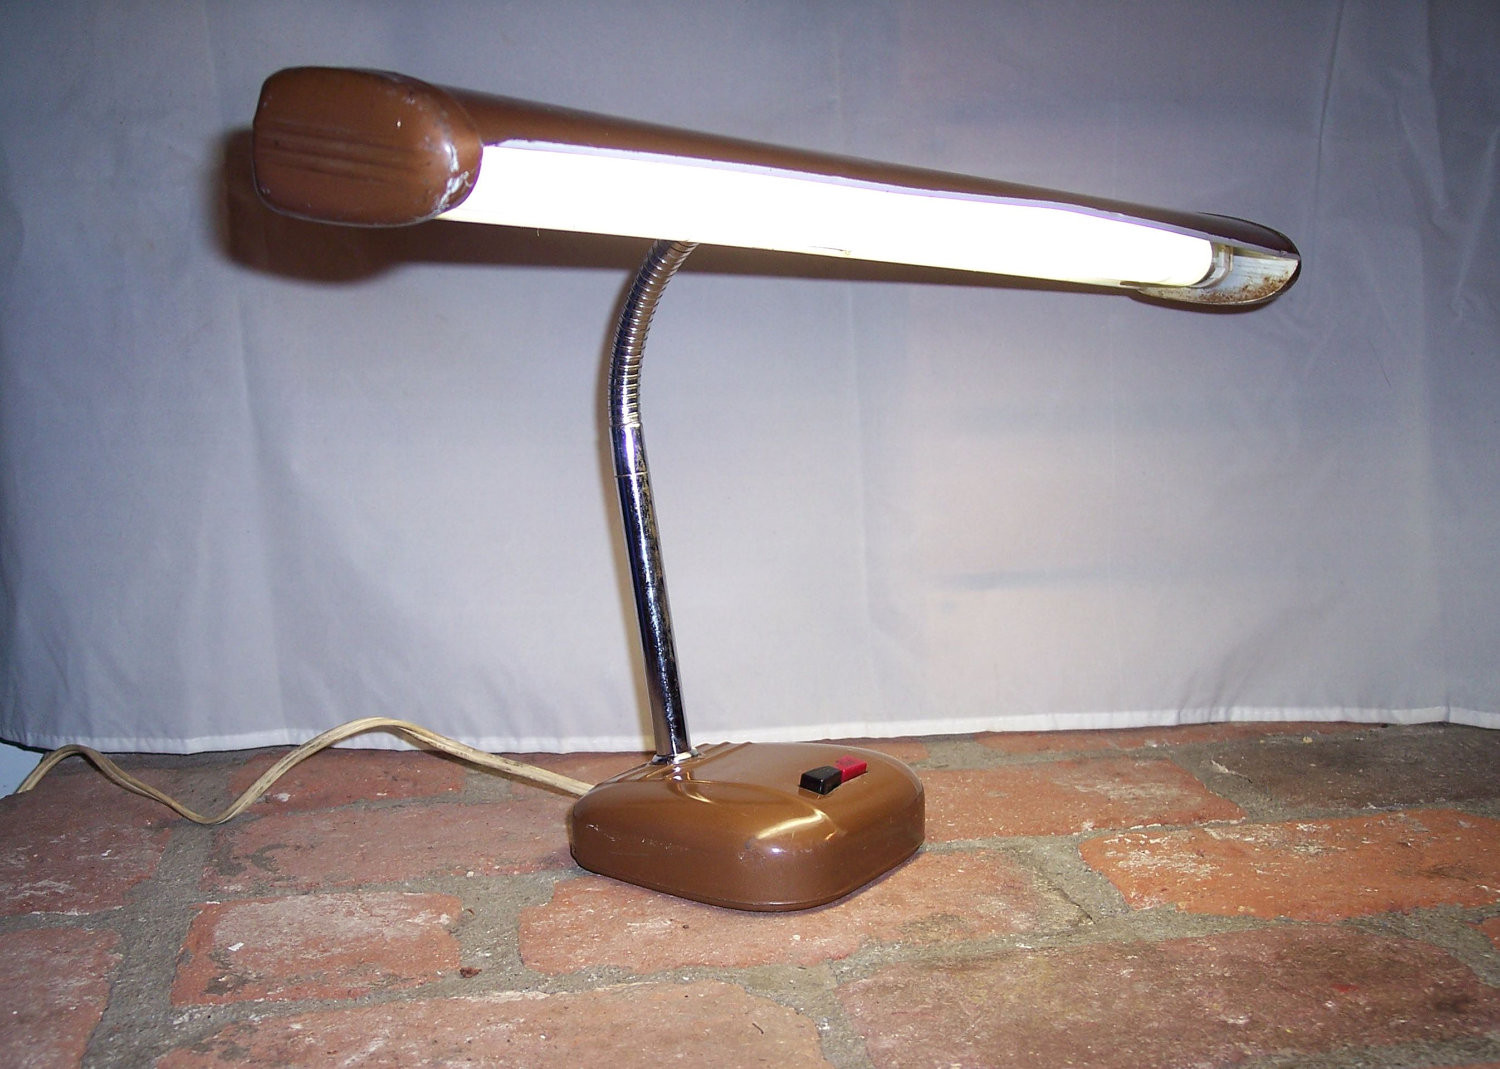 Best ideas about Vintage Desk Lamp
. Save or Pin Vintage fluorescent desk lamp task light by MaAndPasAttic Now.